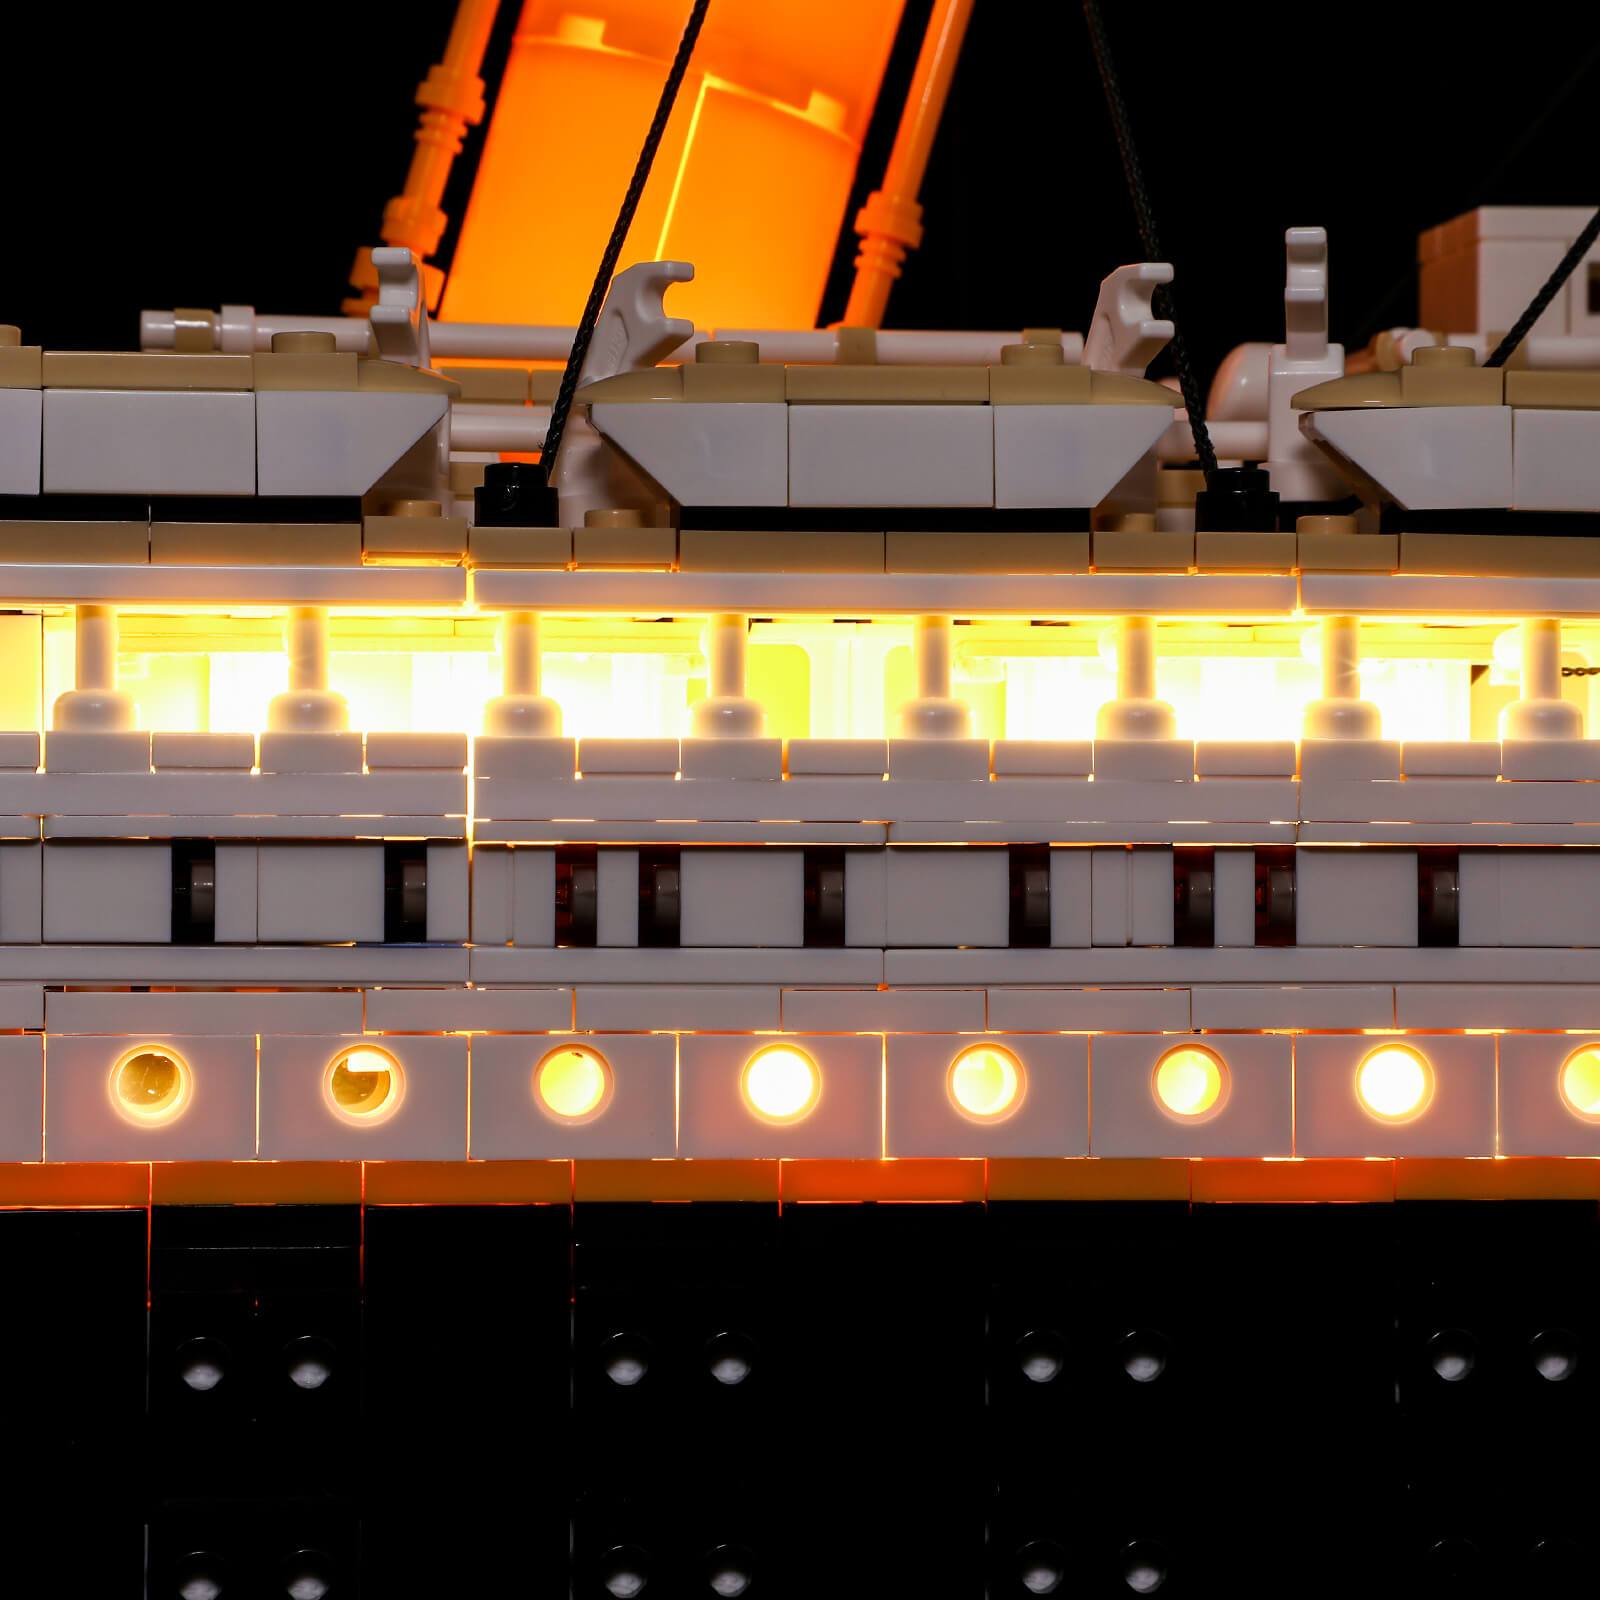 Lego Titanic Kit